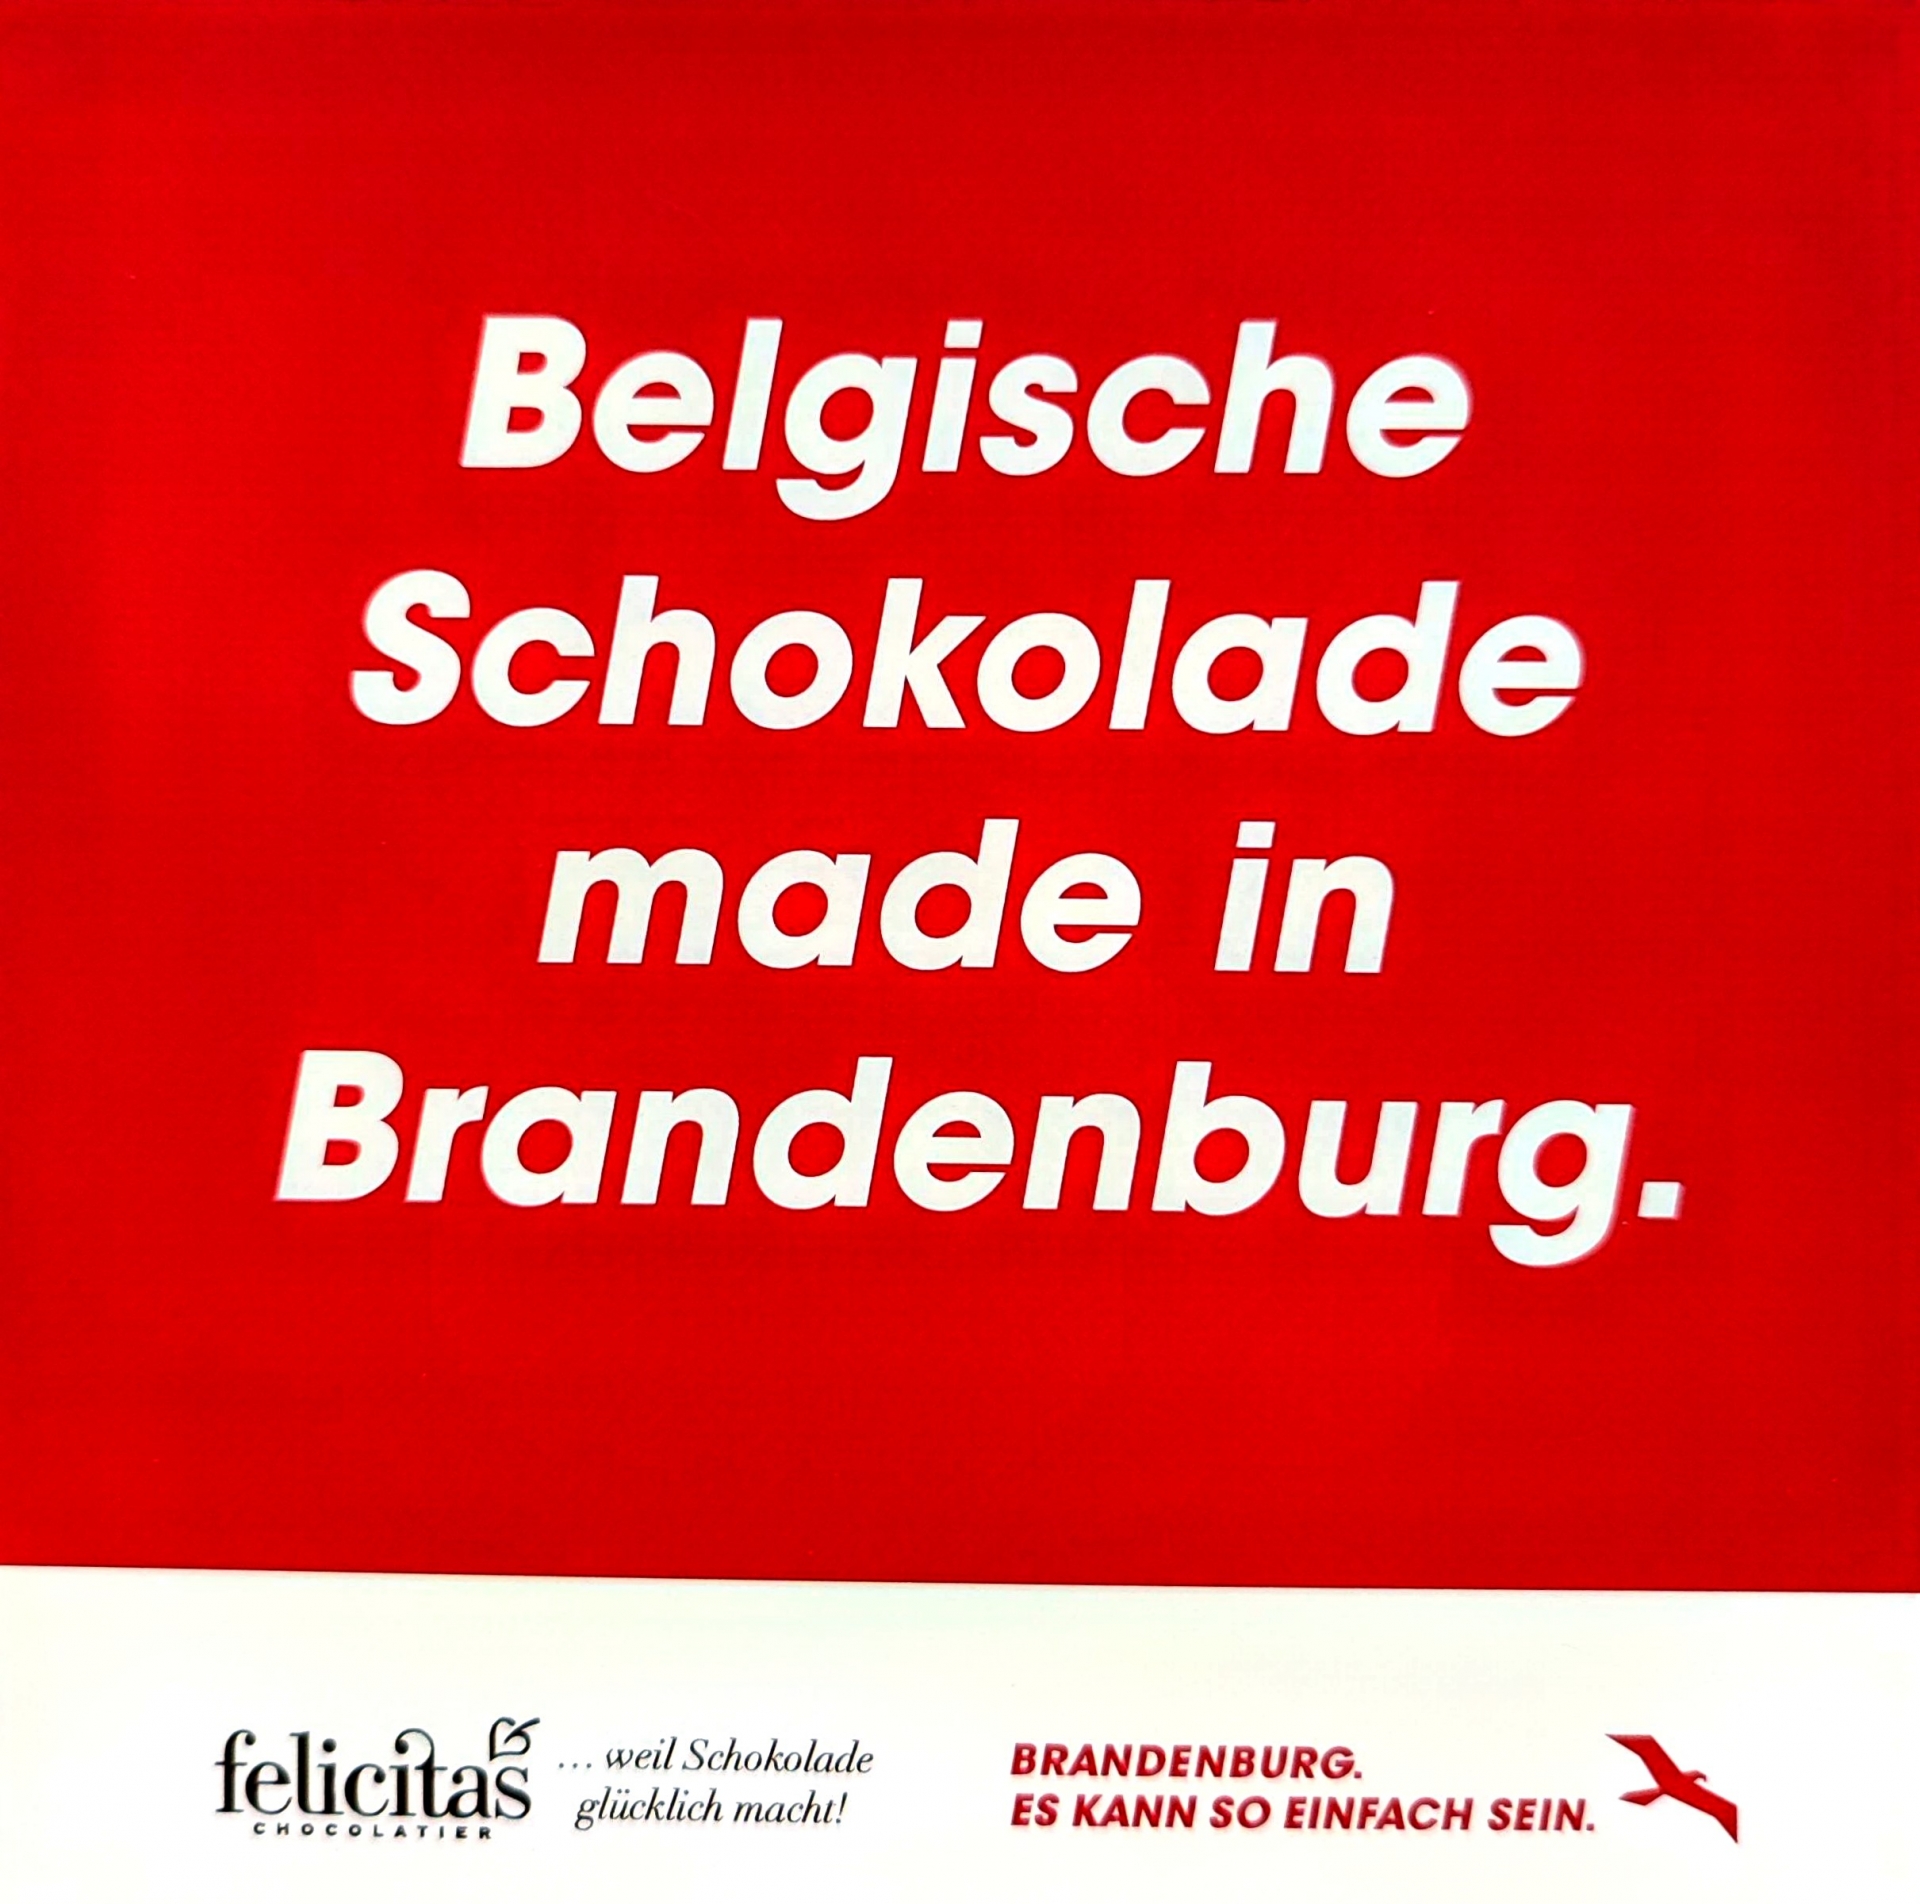 Belgische-Schokolade-made-in-BrandenburglYAuYZk2Su5Lr